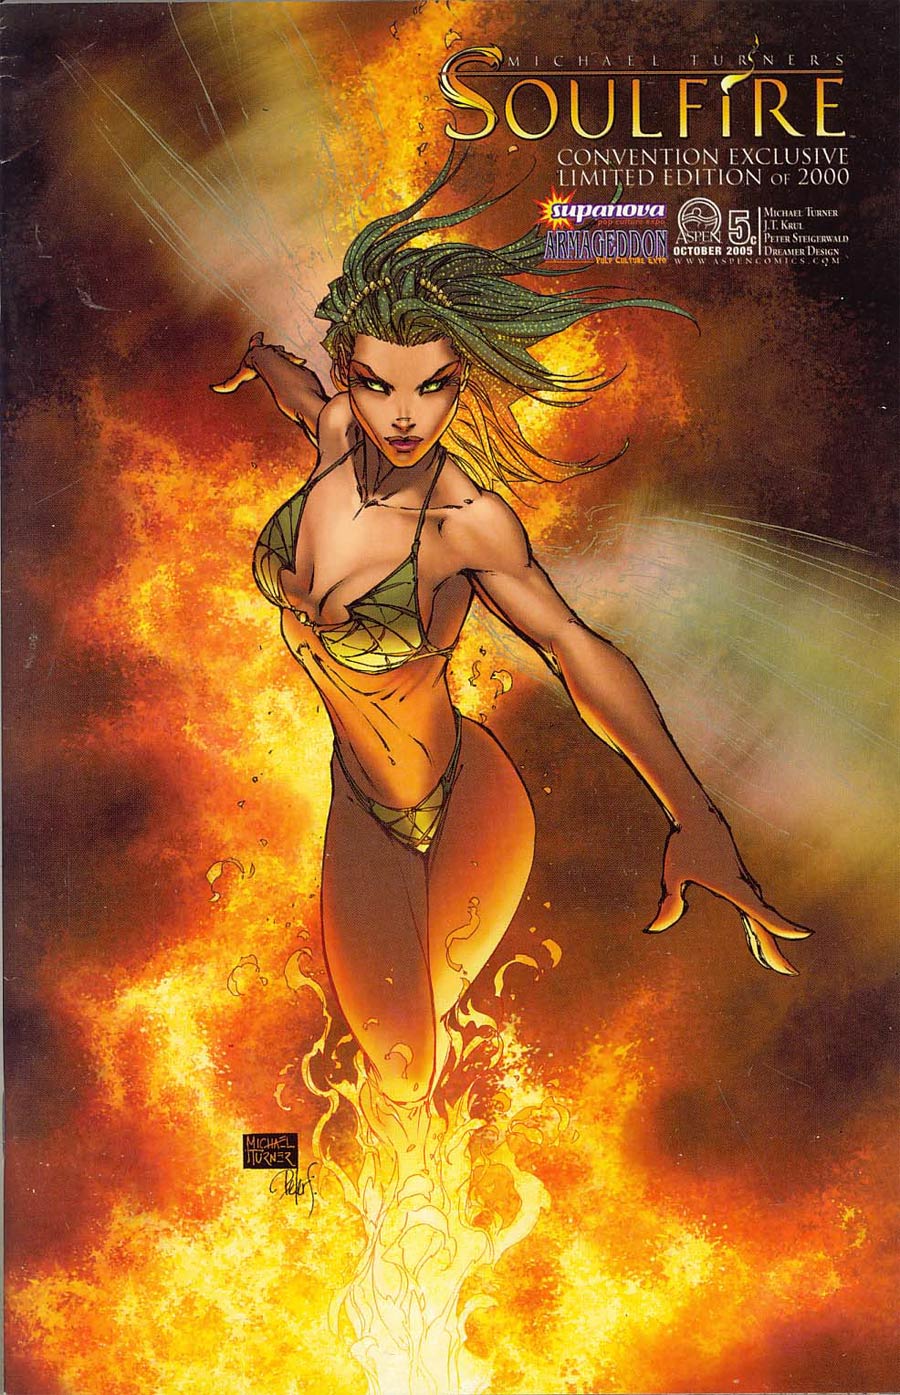 Soulfire #5 Cover C Michael Turner Supernova Armageddon Convention Variant Cover